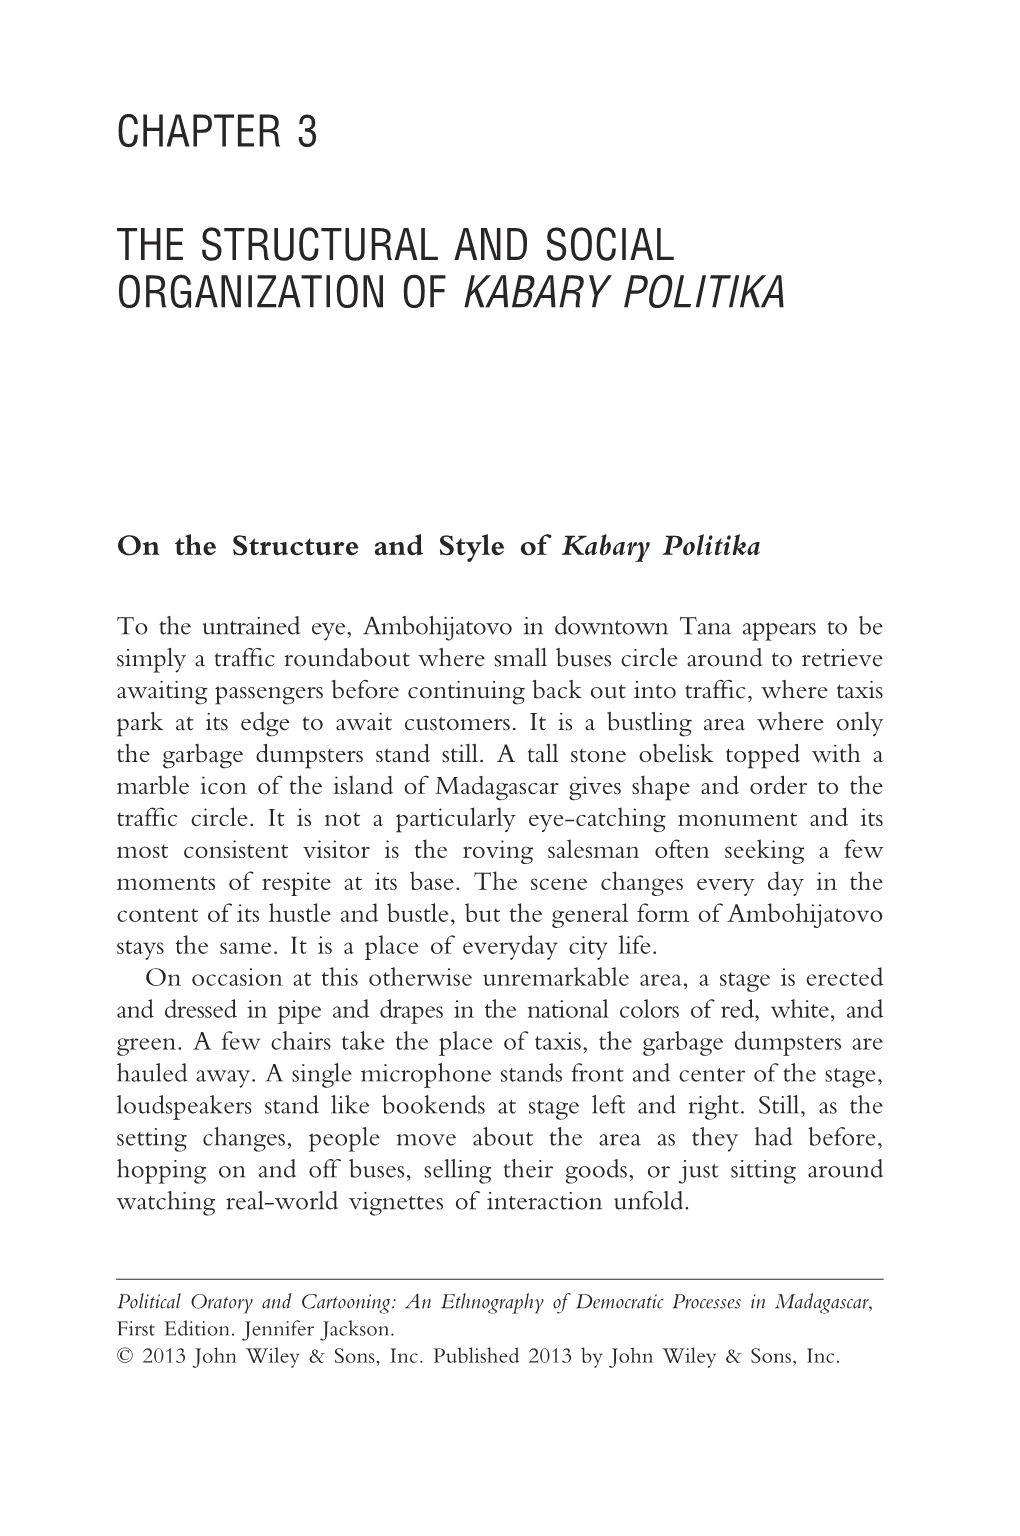 The Structural and Social Organization of Kabary Politika